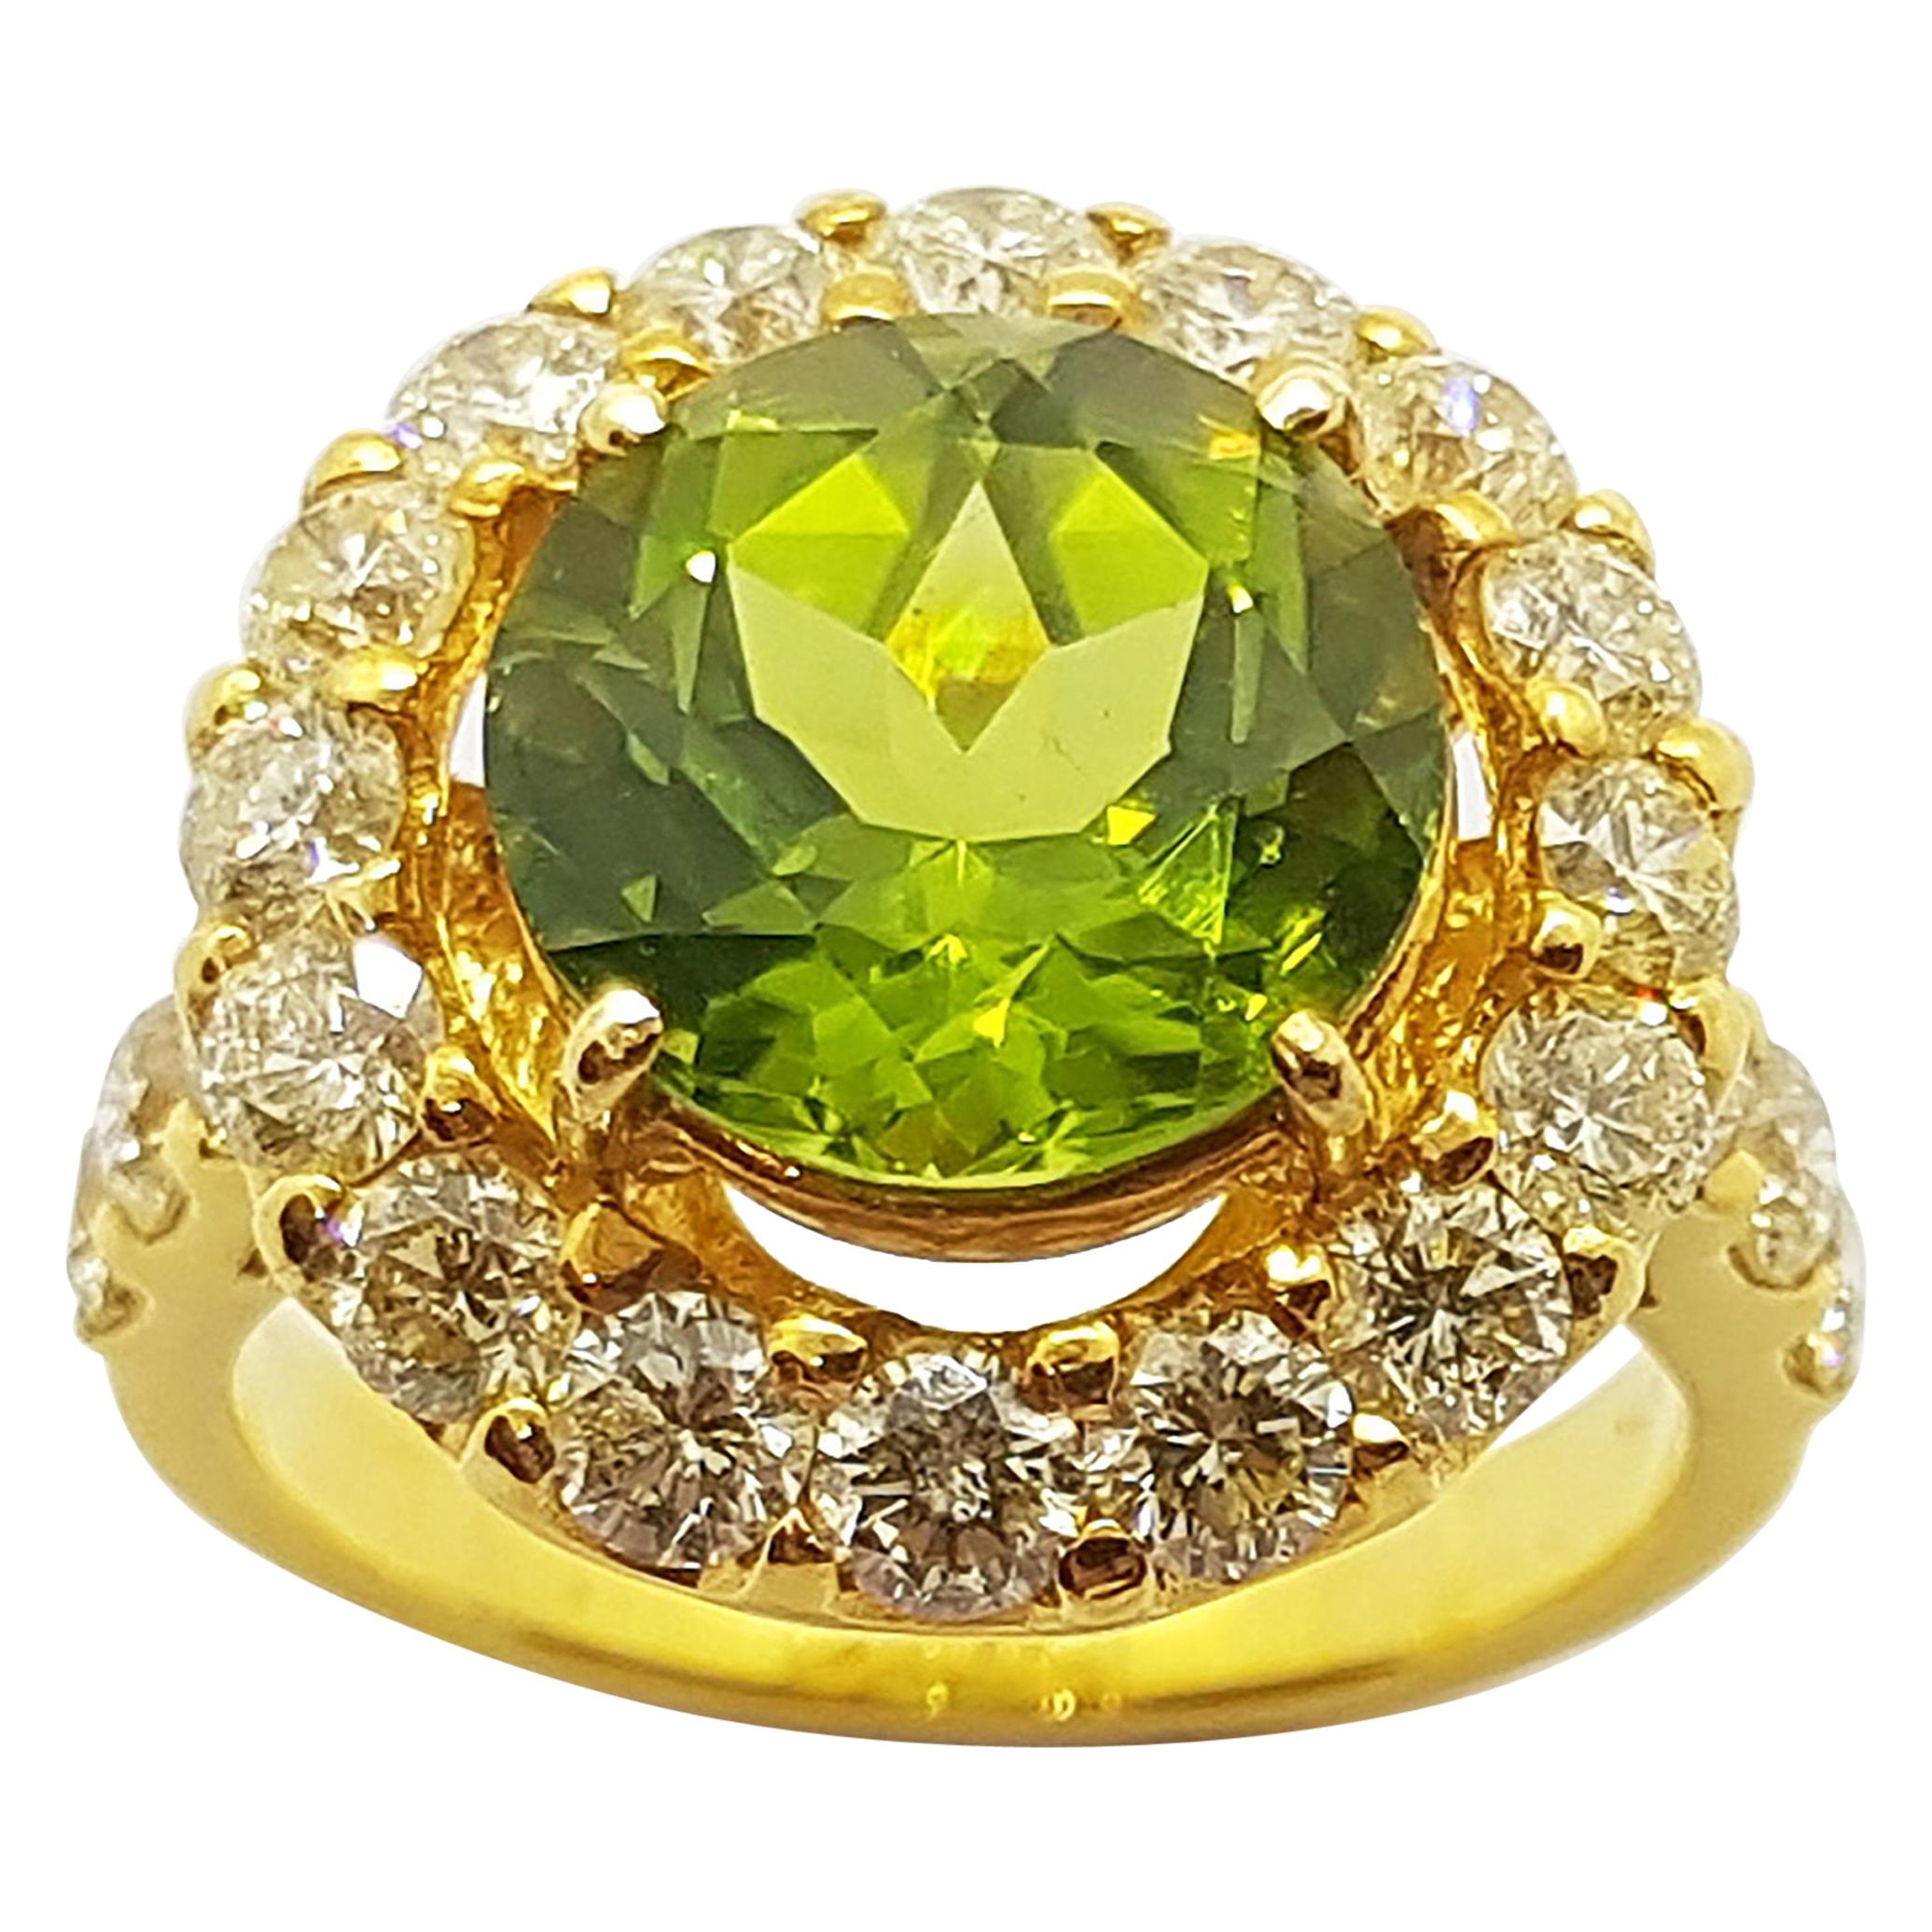 Peridot with Yellow Diamond Ring Set in 18 Karat Gold Settings